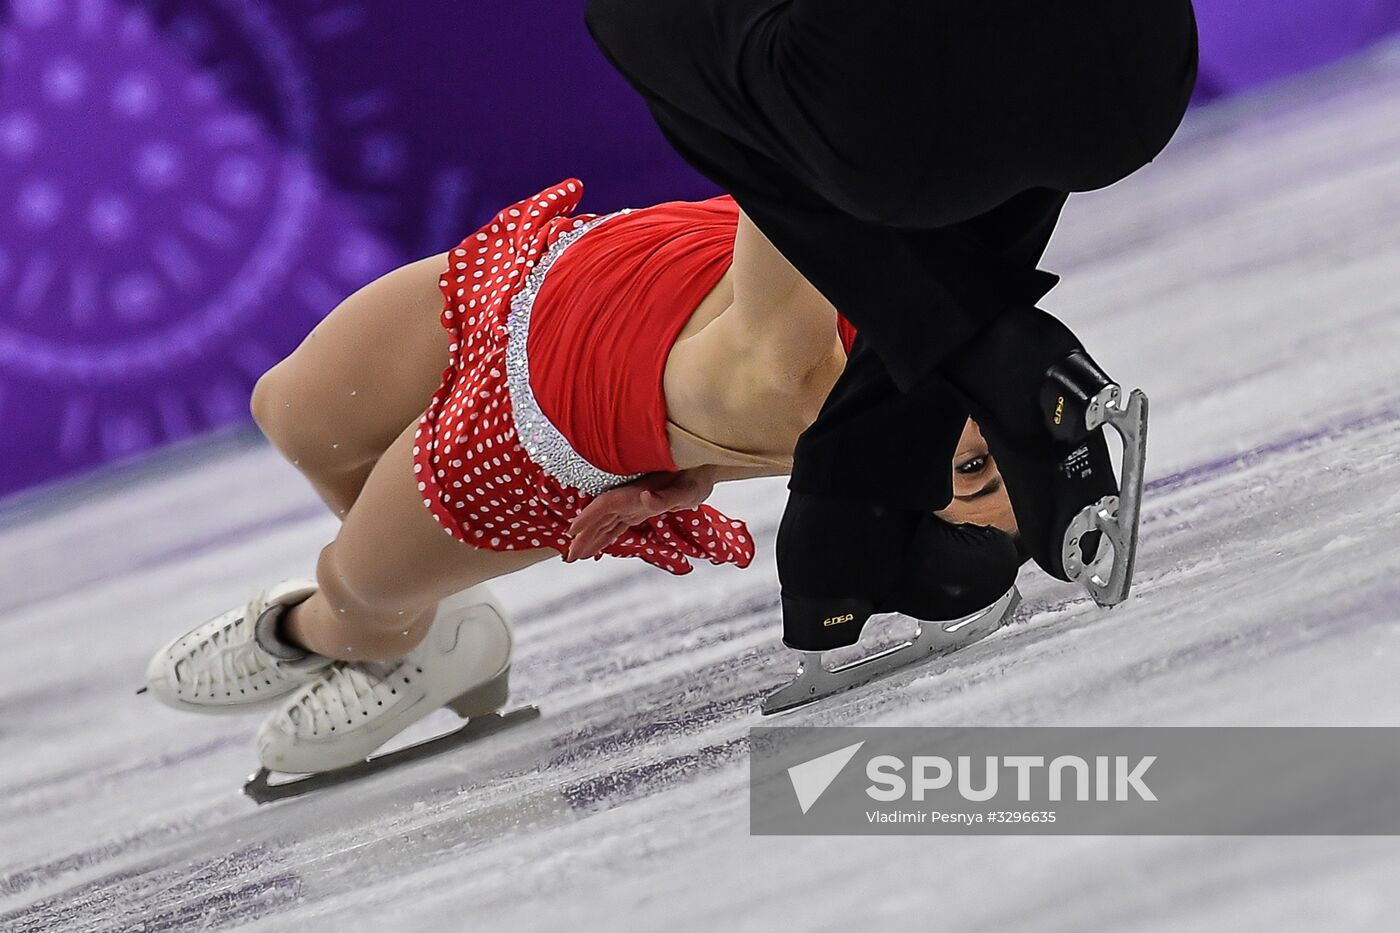 2018 Winter Olympics. Figure skating. Pairs. Short program